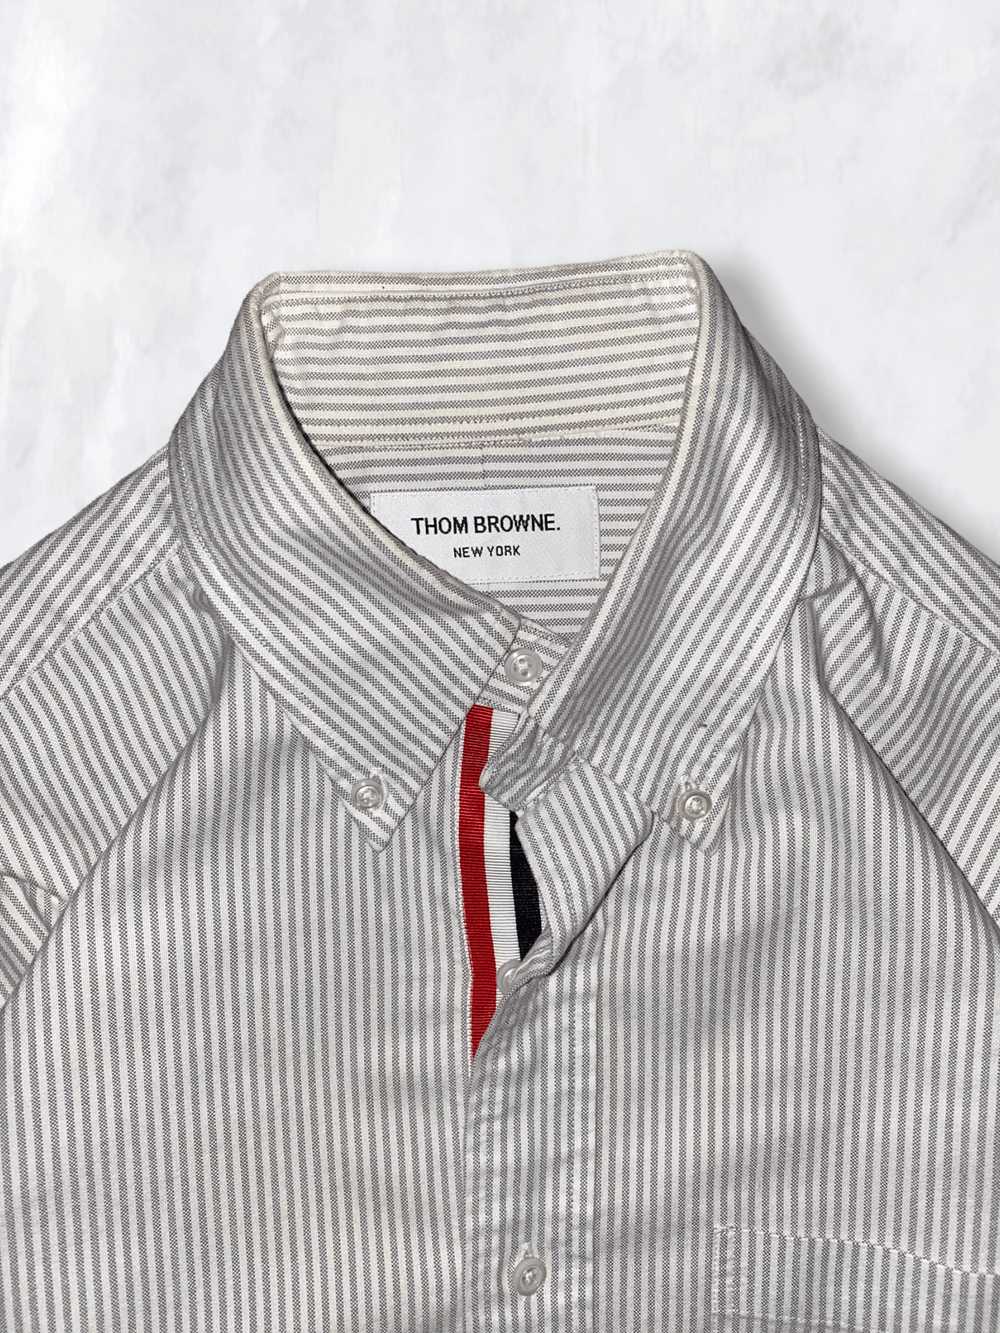 Thom Browne Orignial Stripe Oxford Shirt, White/G… - image 2